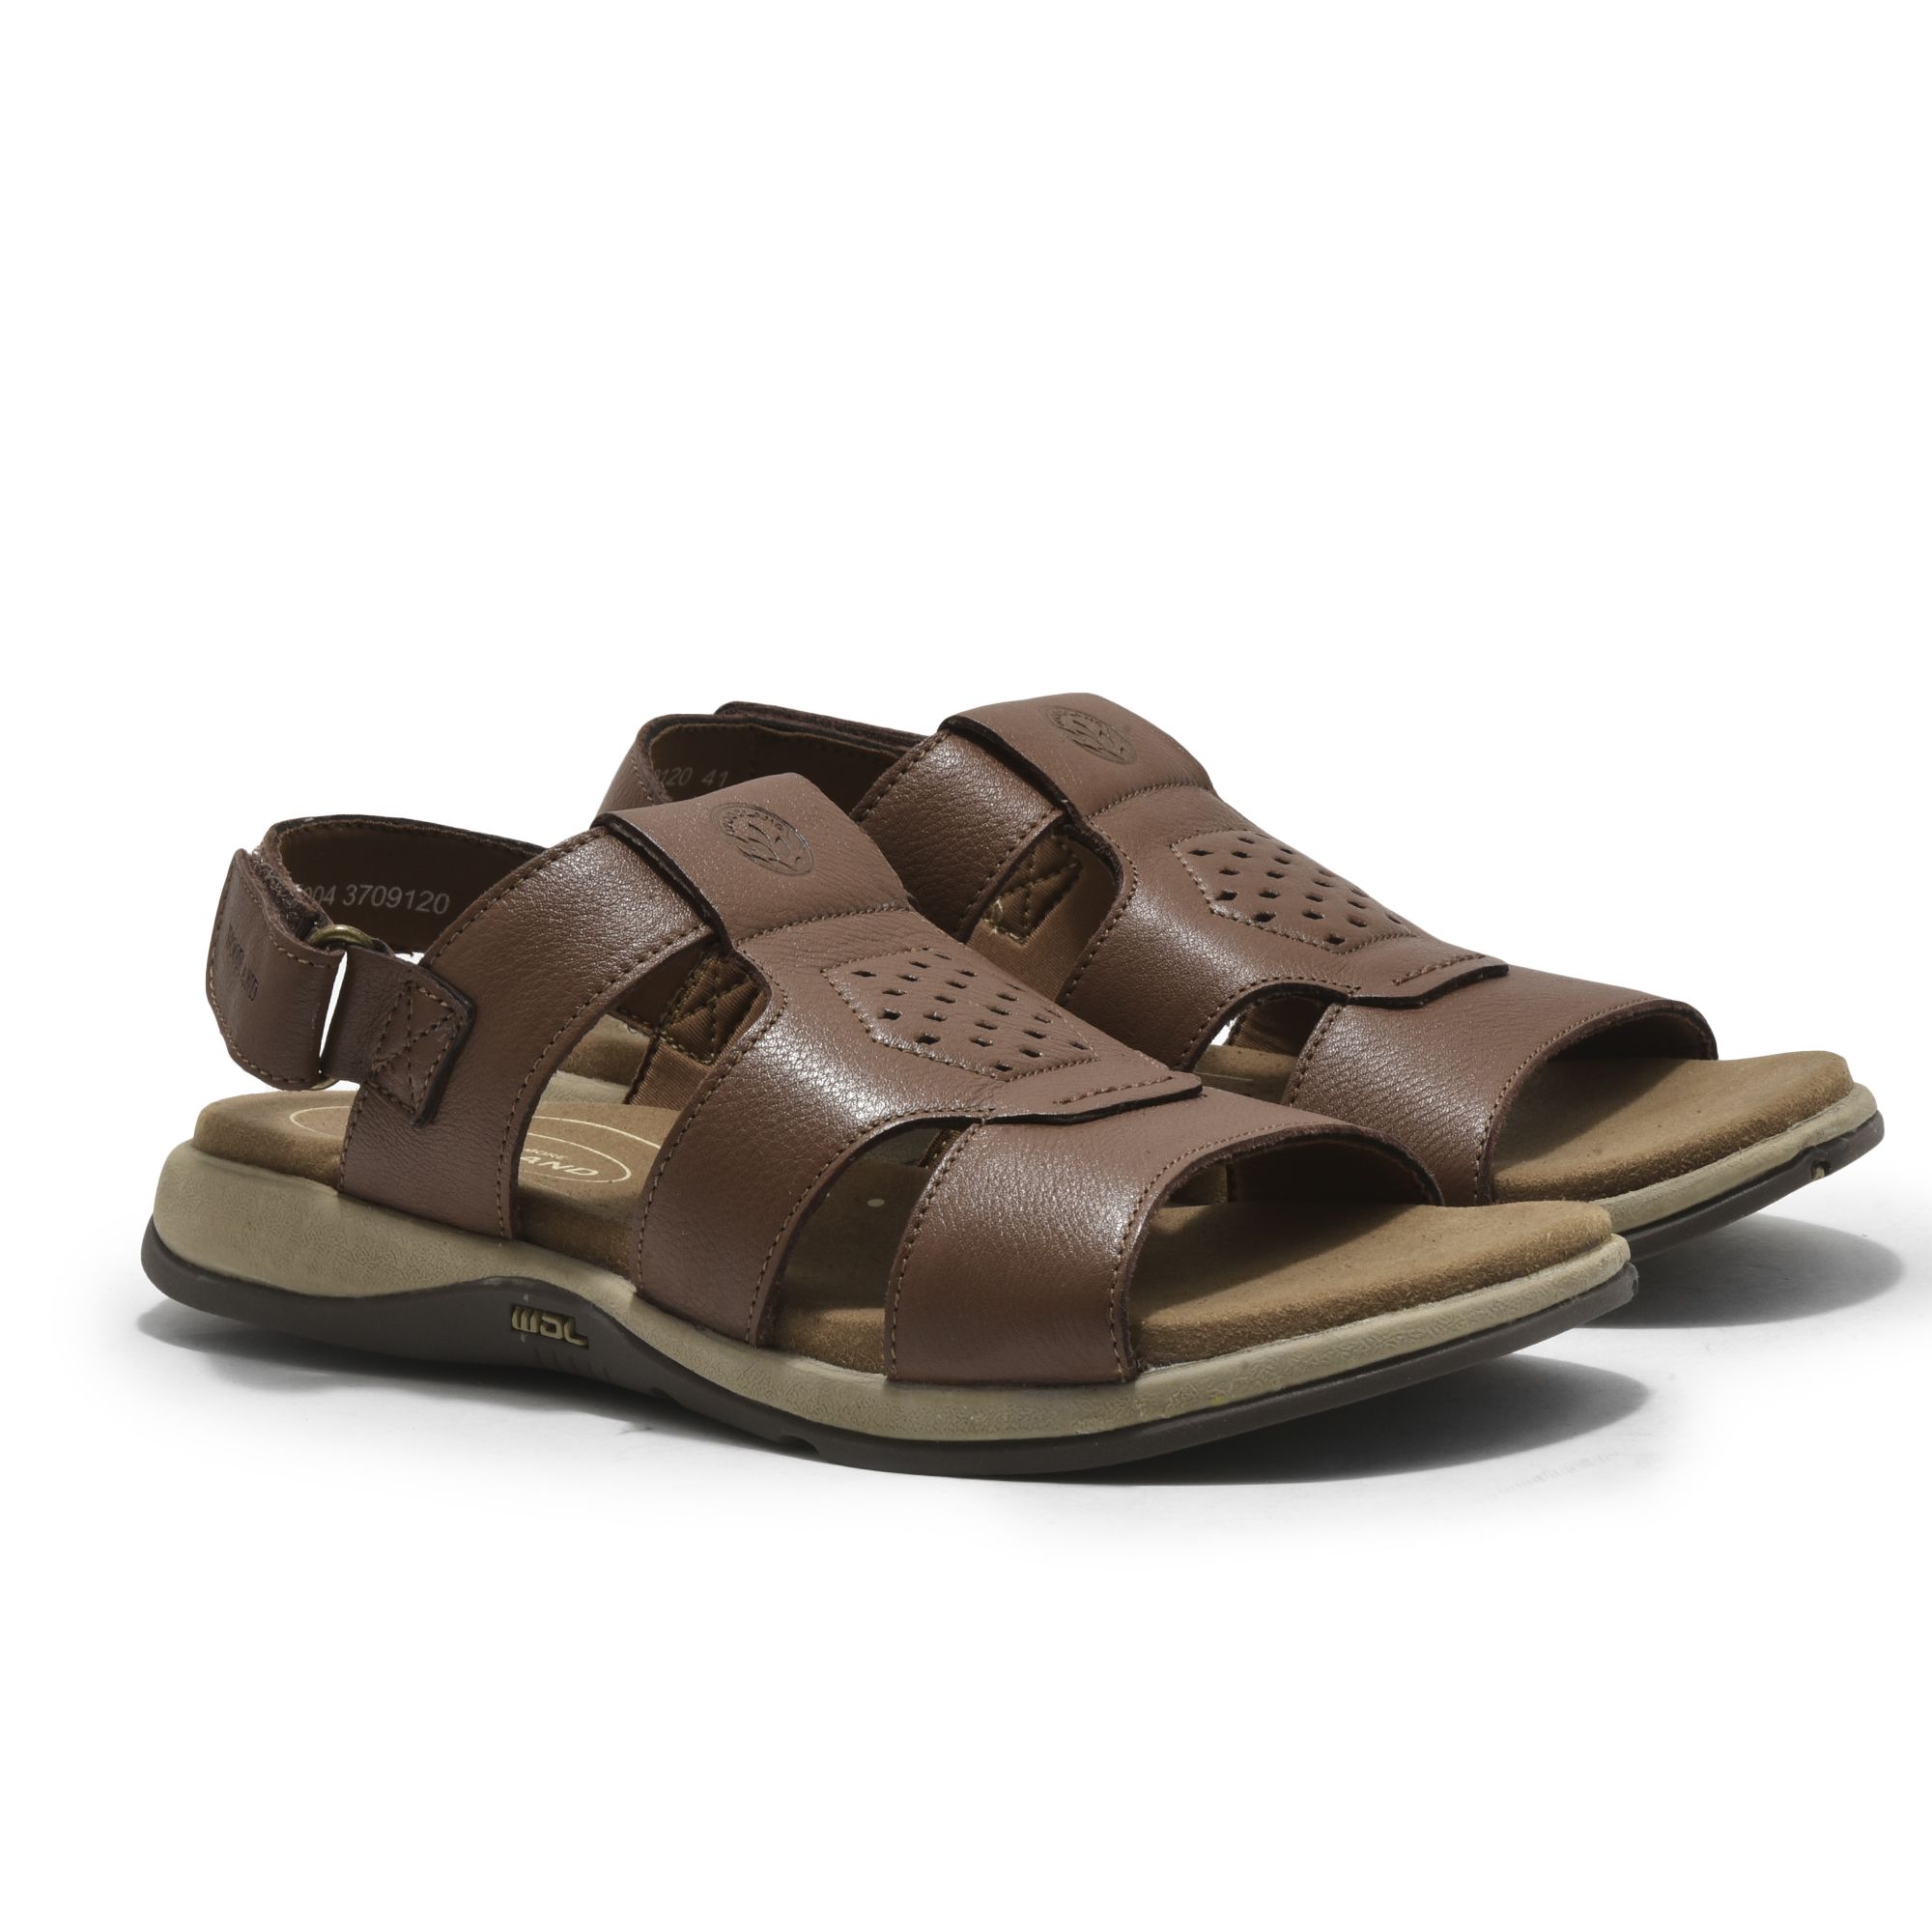 Tan Leather sandal for men